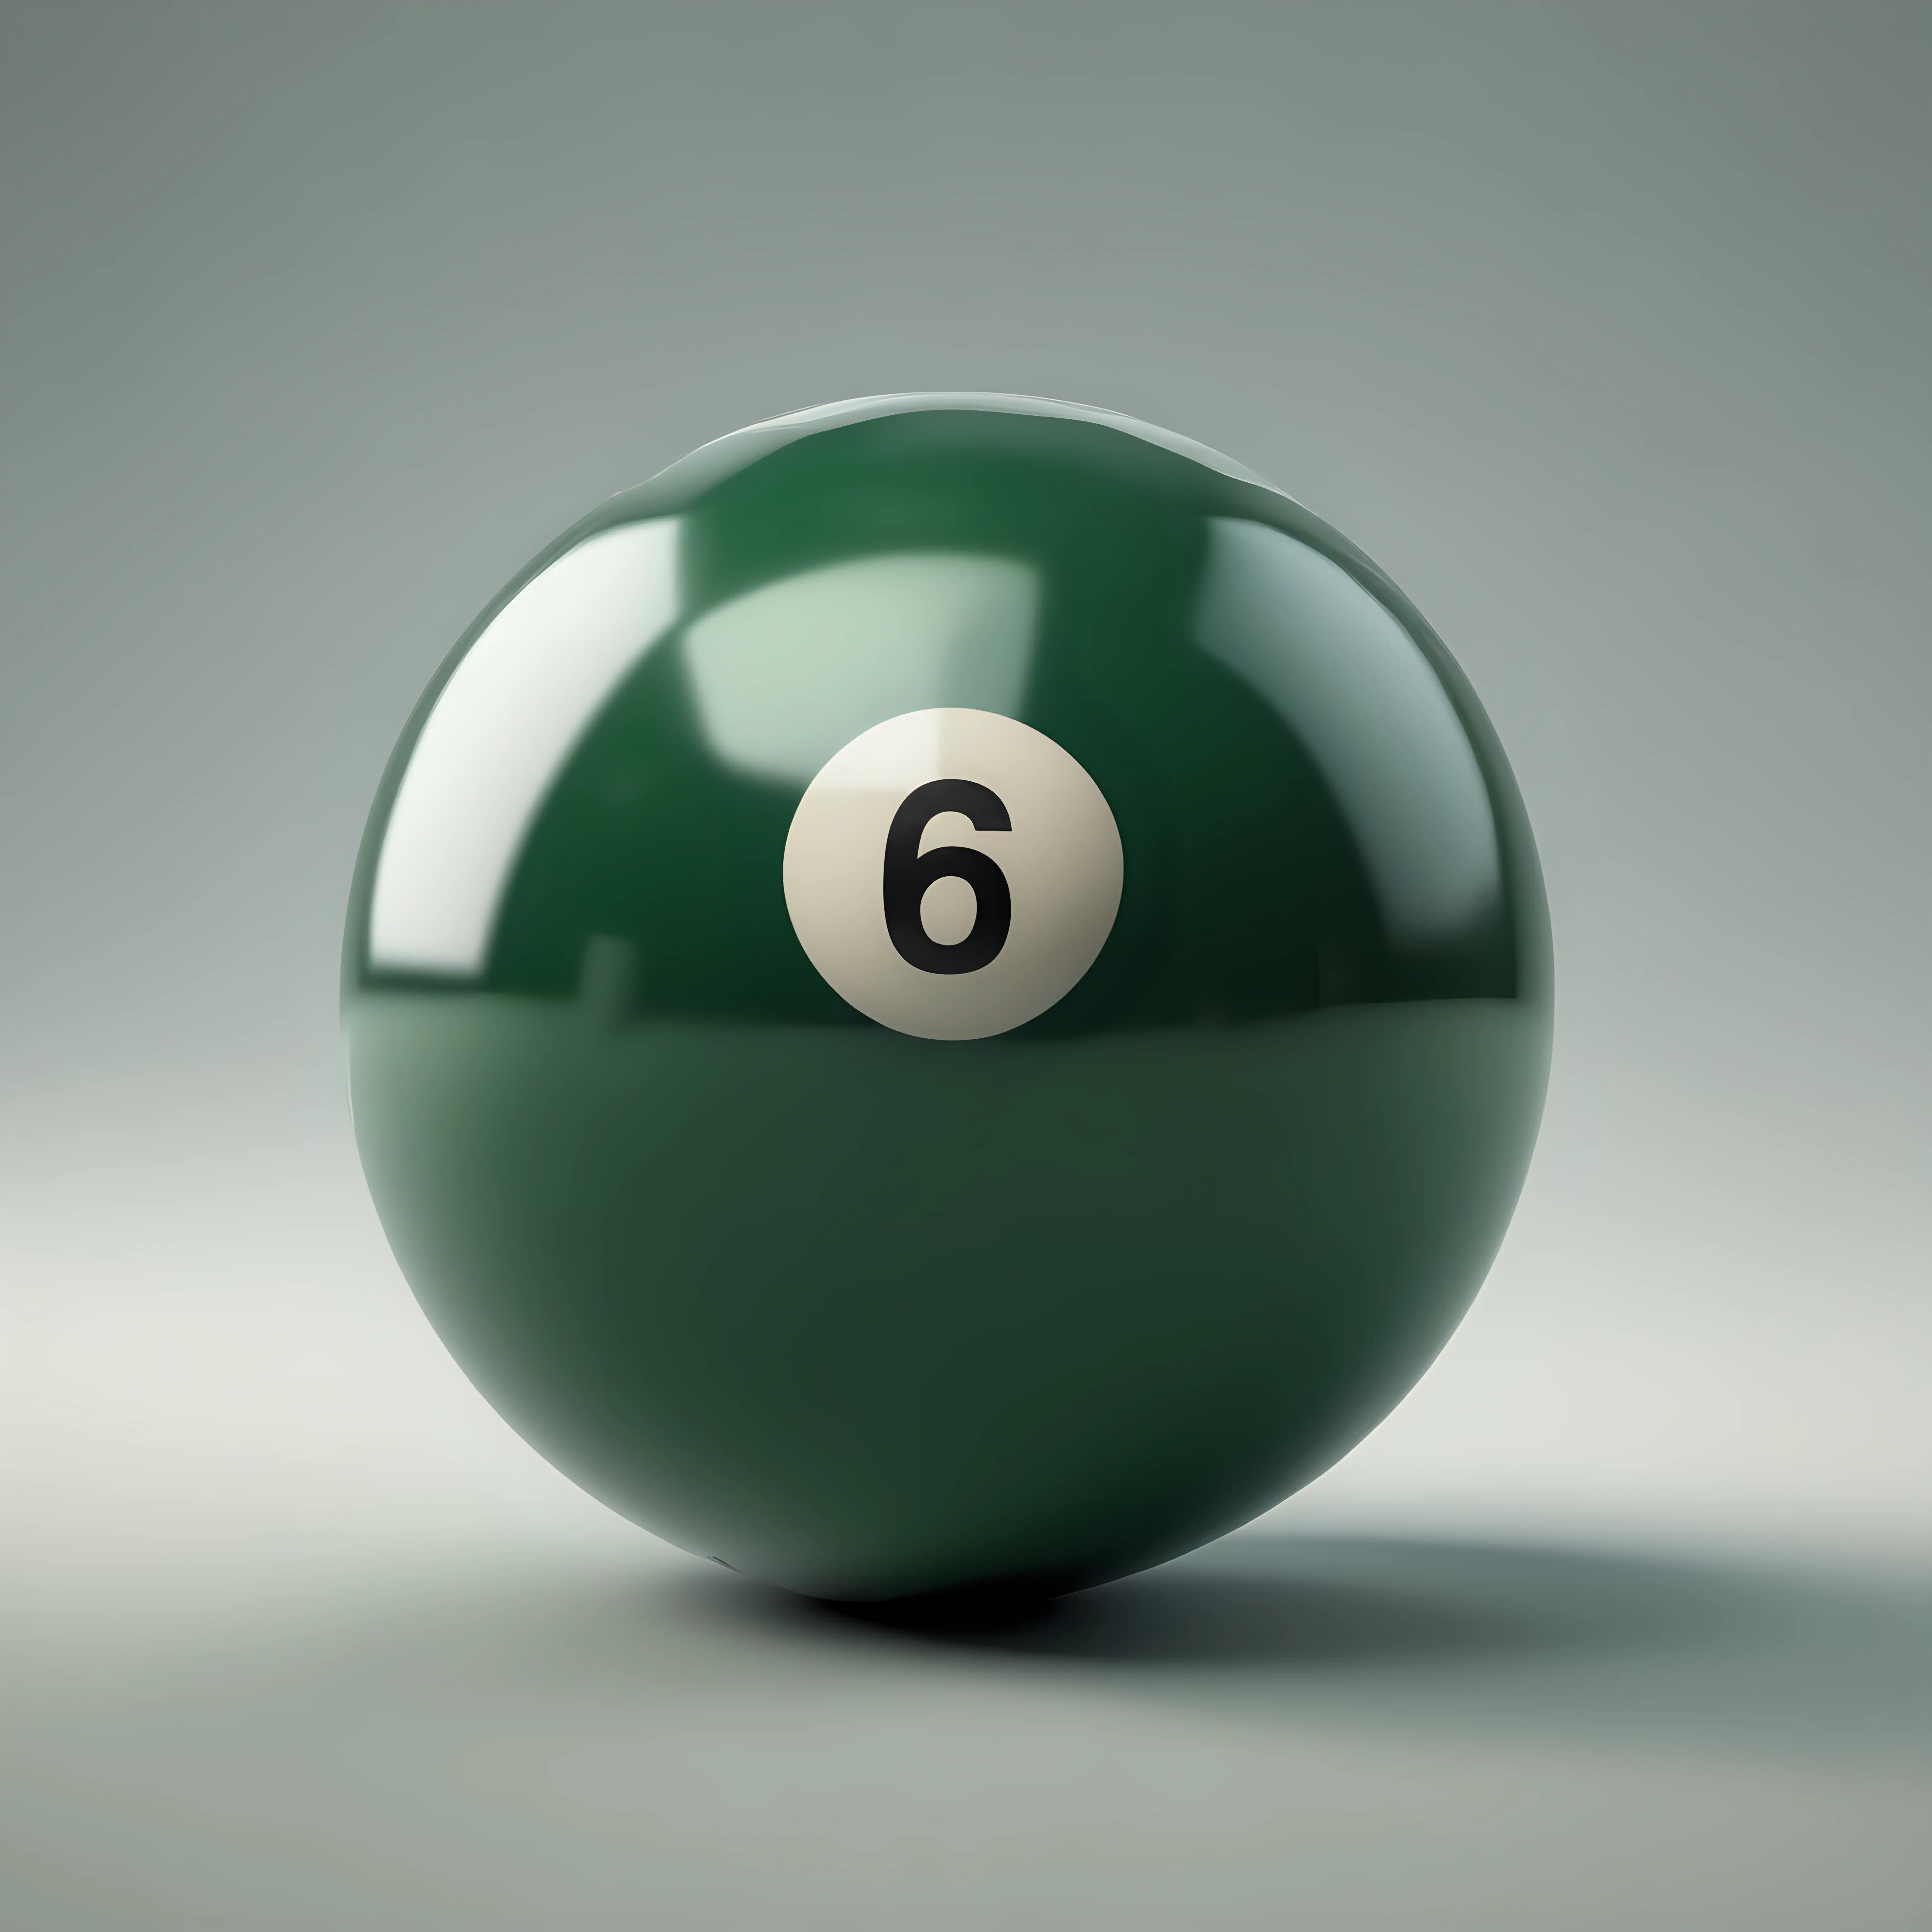 Hyper Realistic Dark Green Billiard Balls Floating on White Background